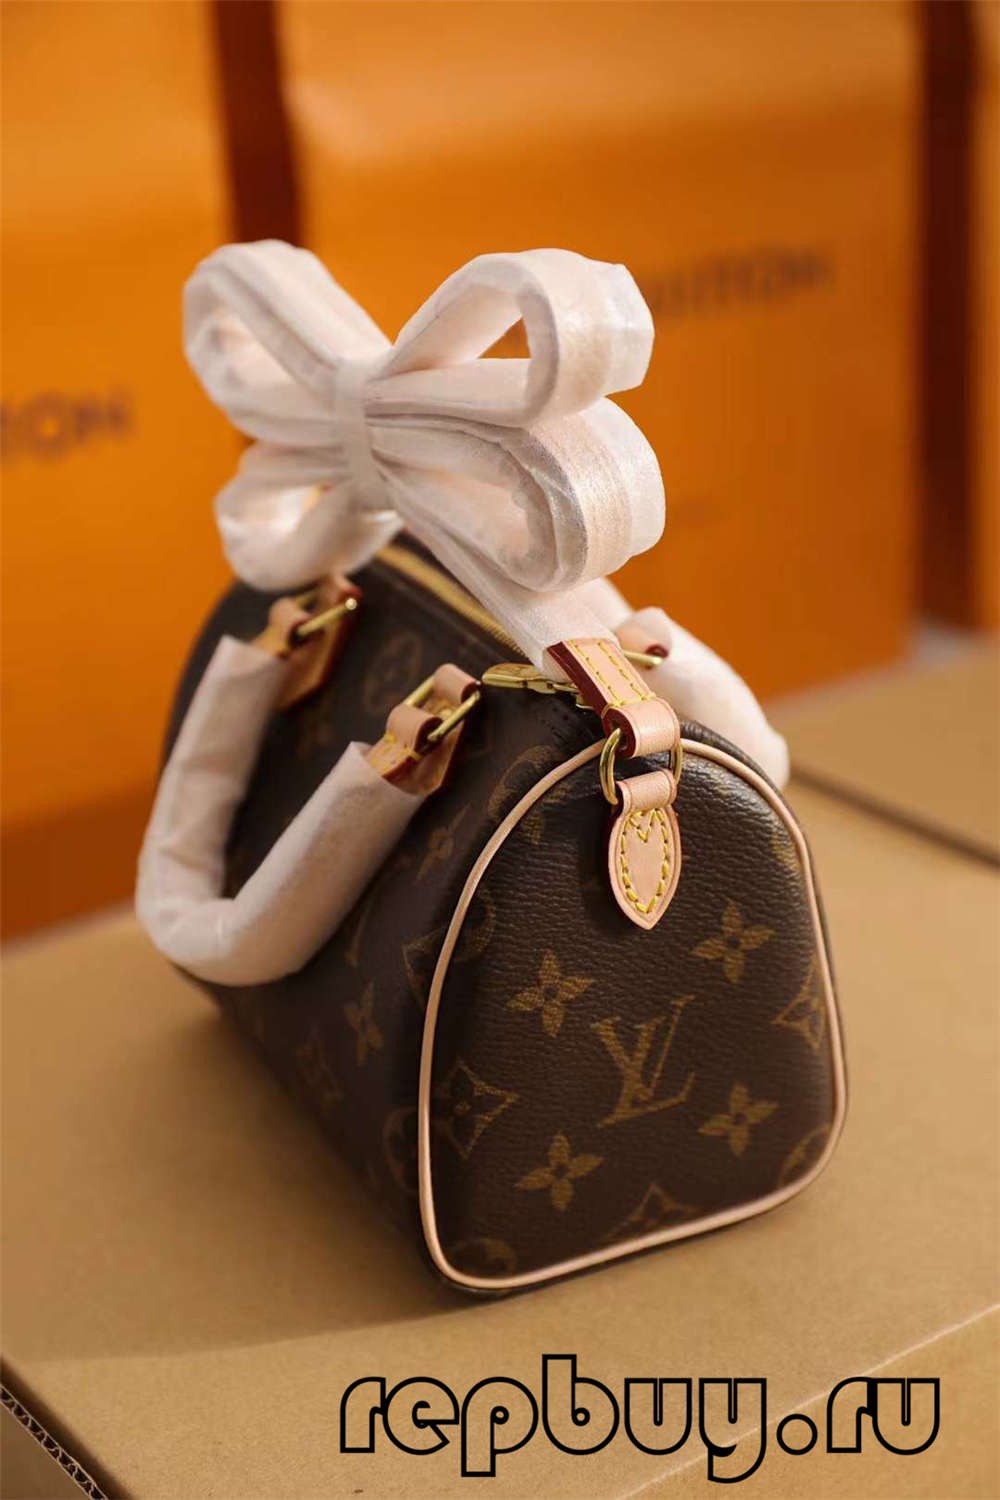 Louis Vuitton M81085 Nano Speedy 16 cm-es csúcsminőségű replika táskák (2022 legfrissebb) - A legjobb minőségű hamis Louis Vuitton táska online áruház, Replica designer bag ru